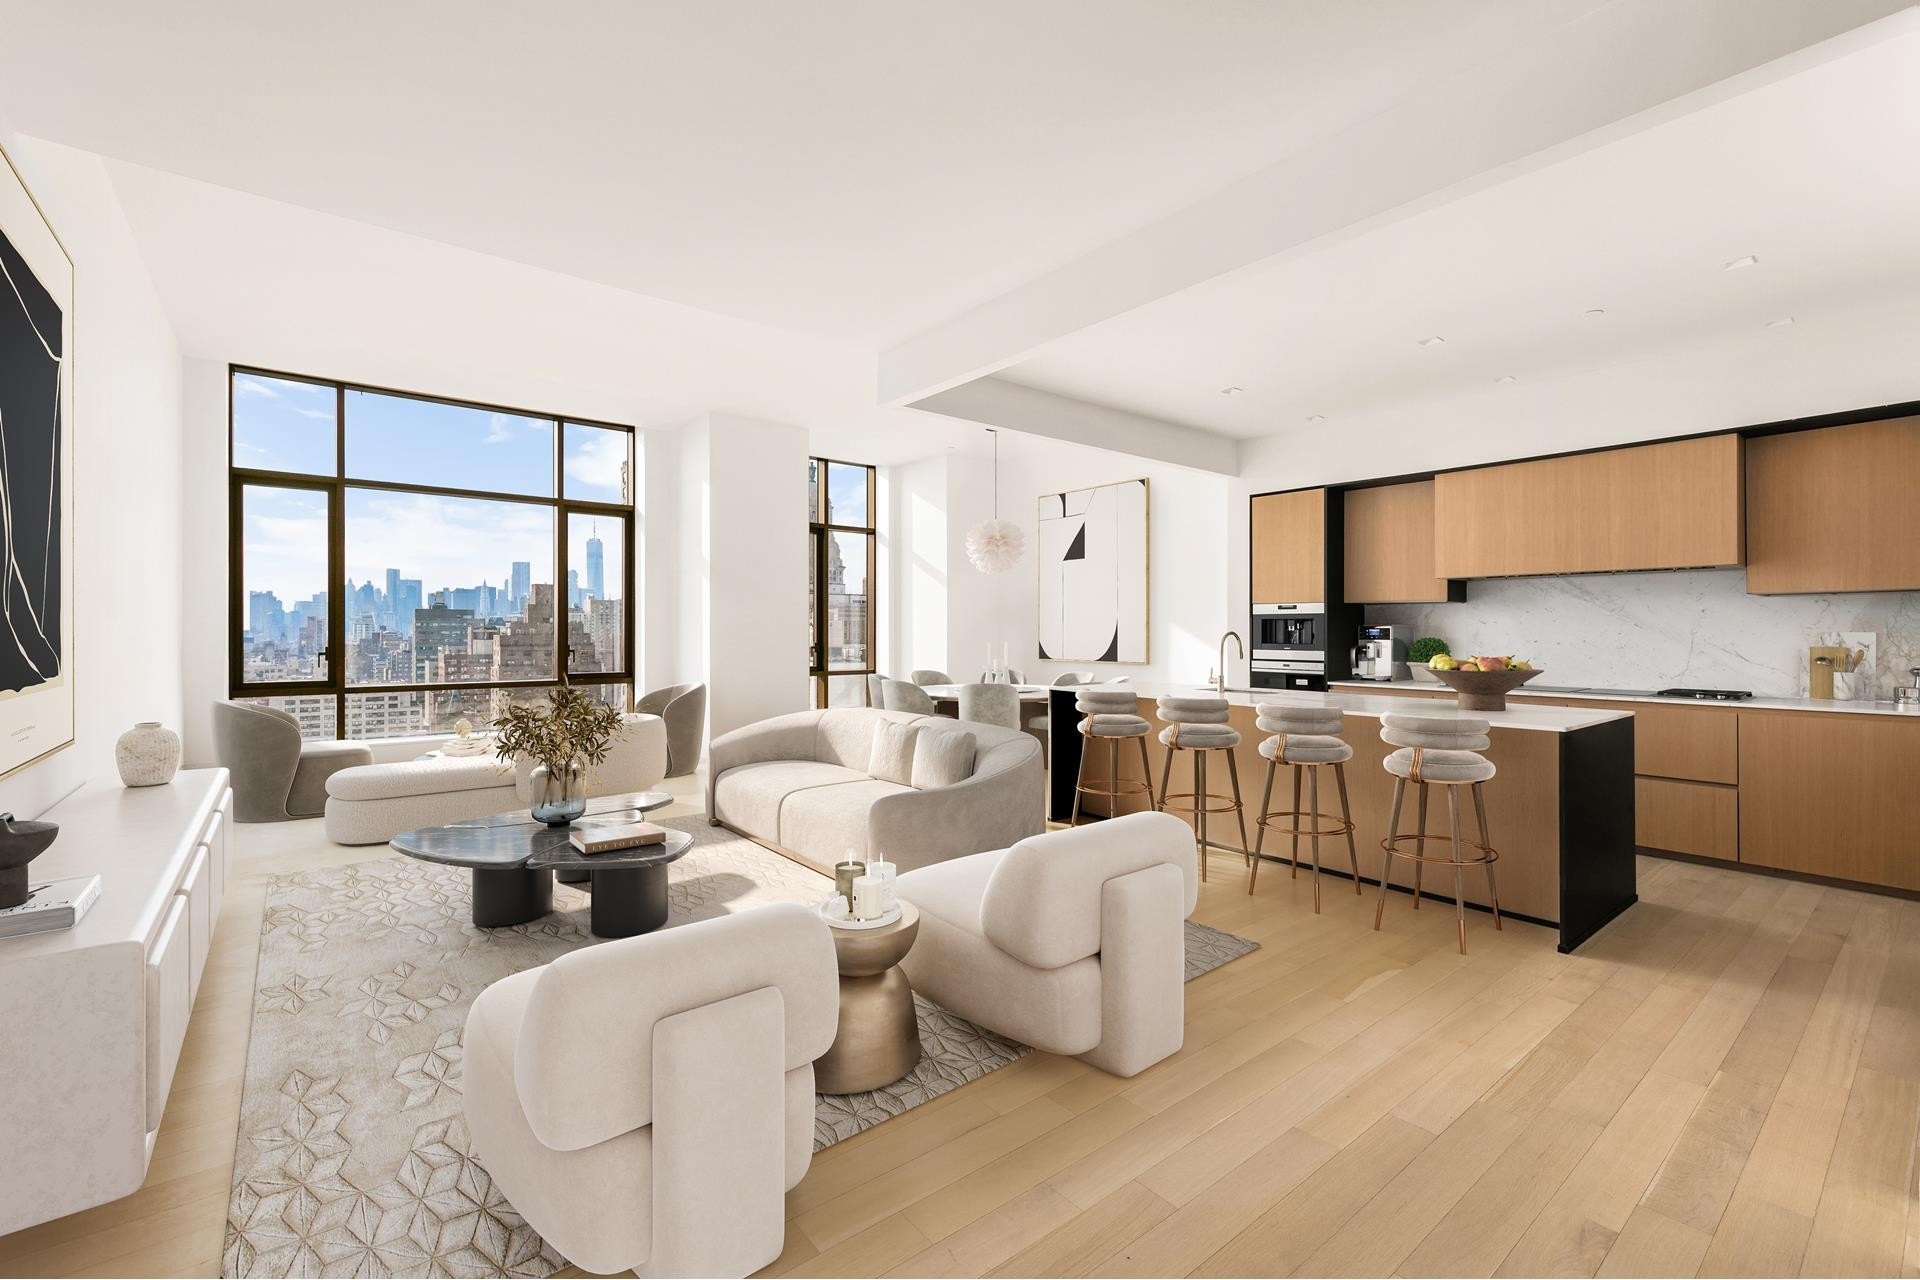 Condominium for Sale at Gramercy Square, 215 E 19TH ST, 17A Gramercy Park, New York, NY 10003